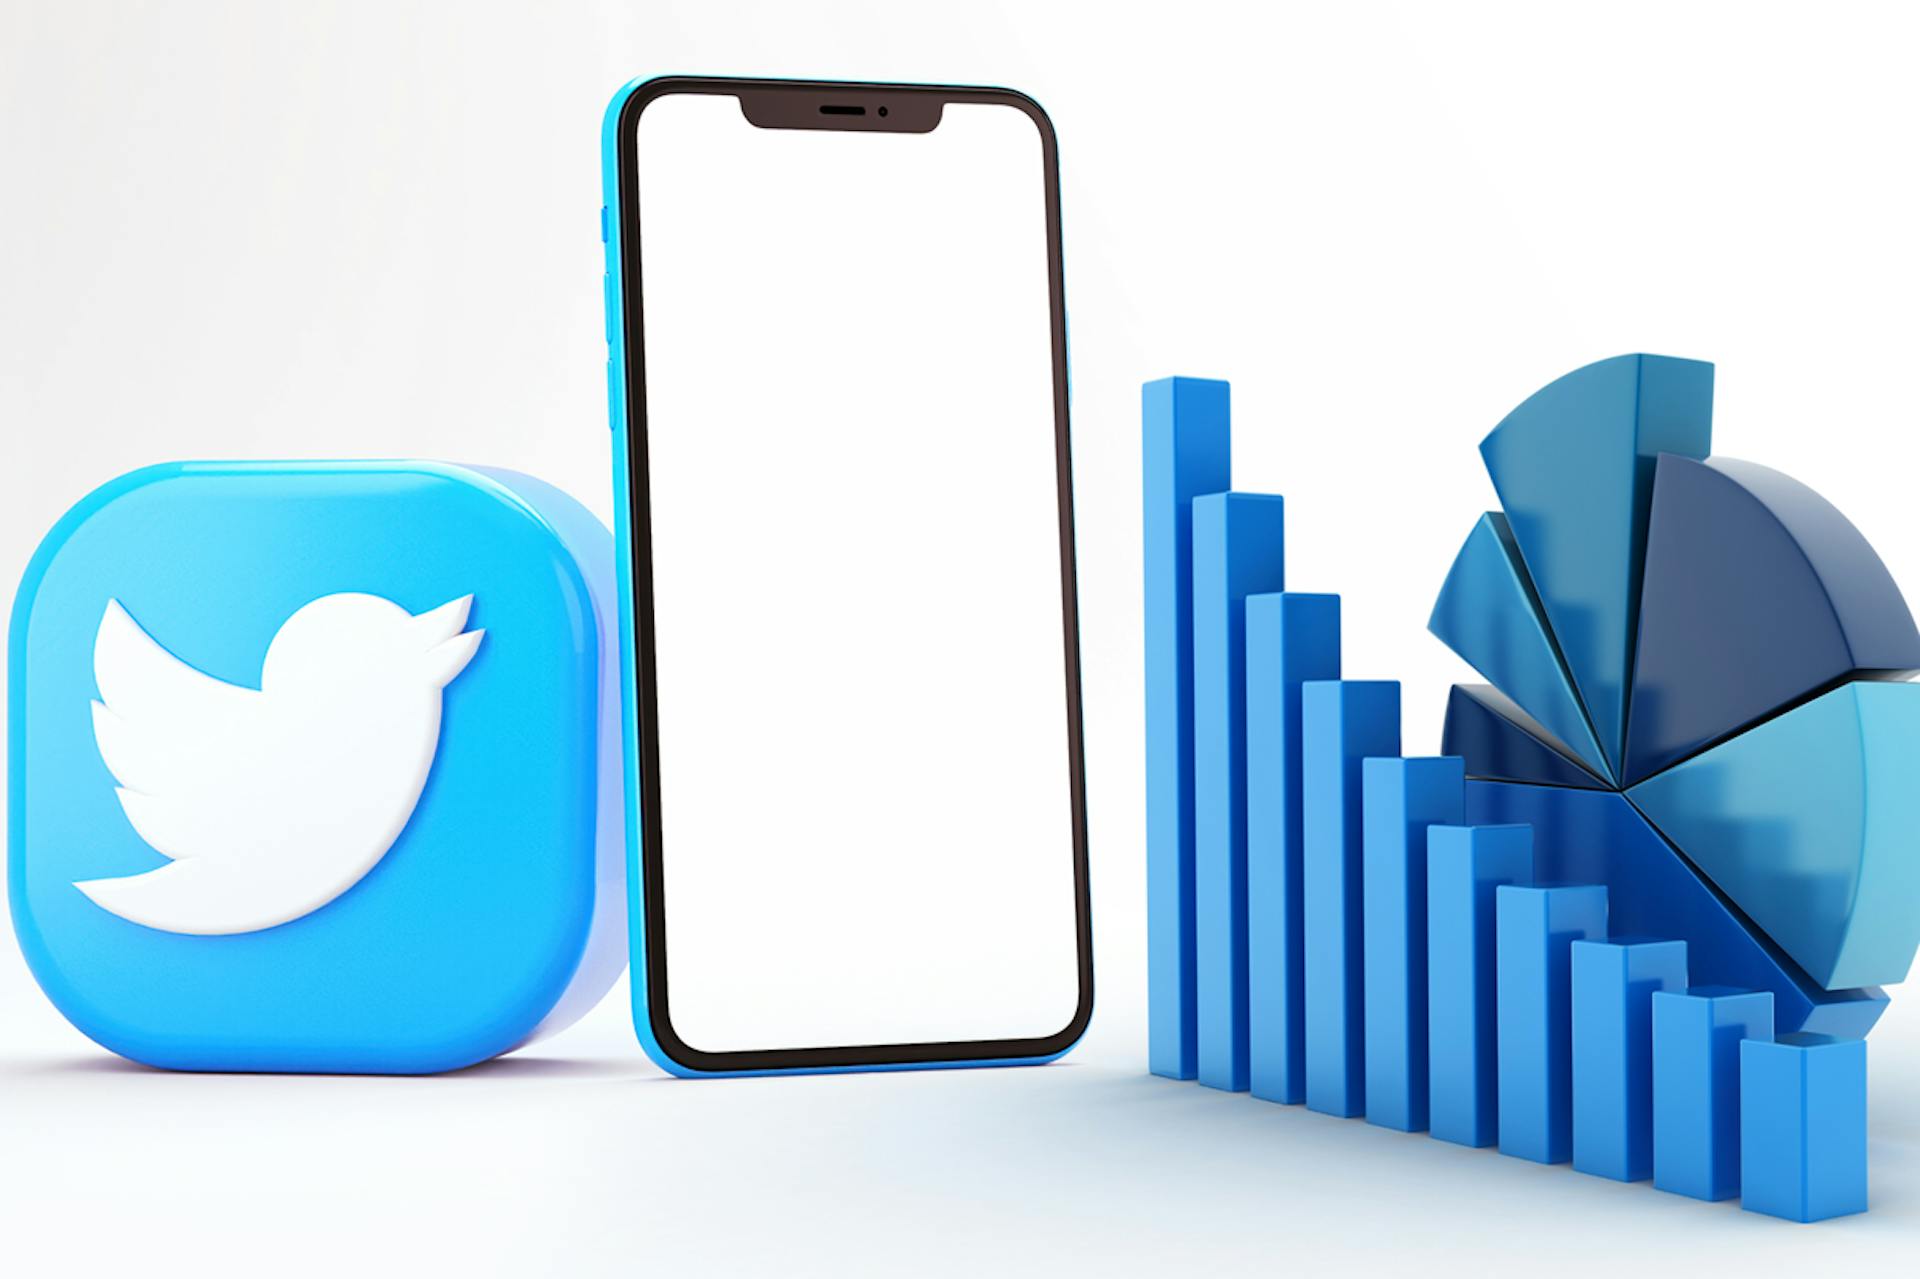 Illustrated Twitter logo, smartphone, and Twitter analytics graph. Analytics for Twitter blog post